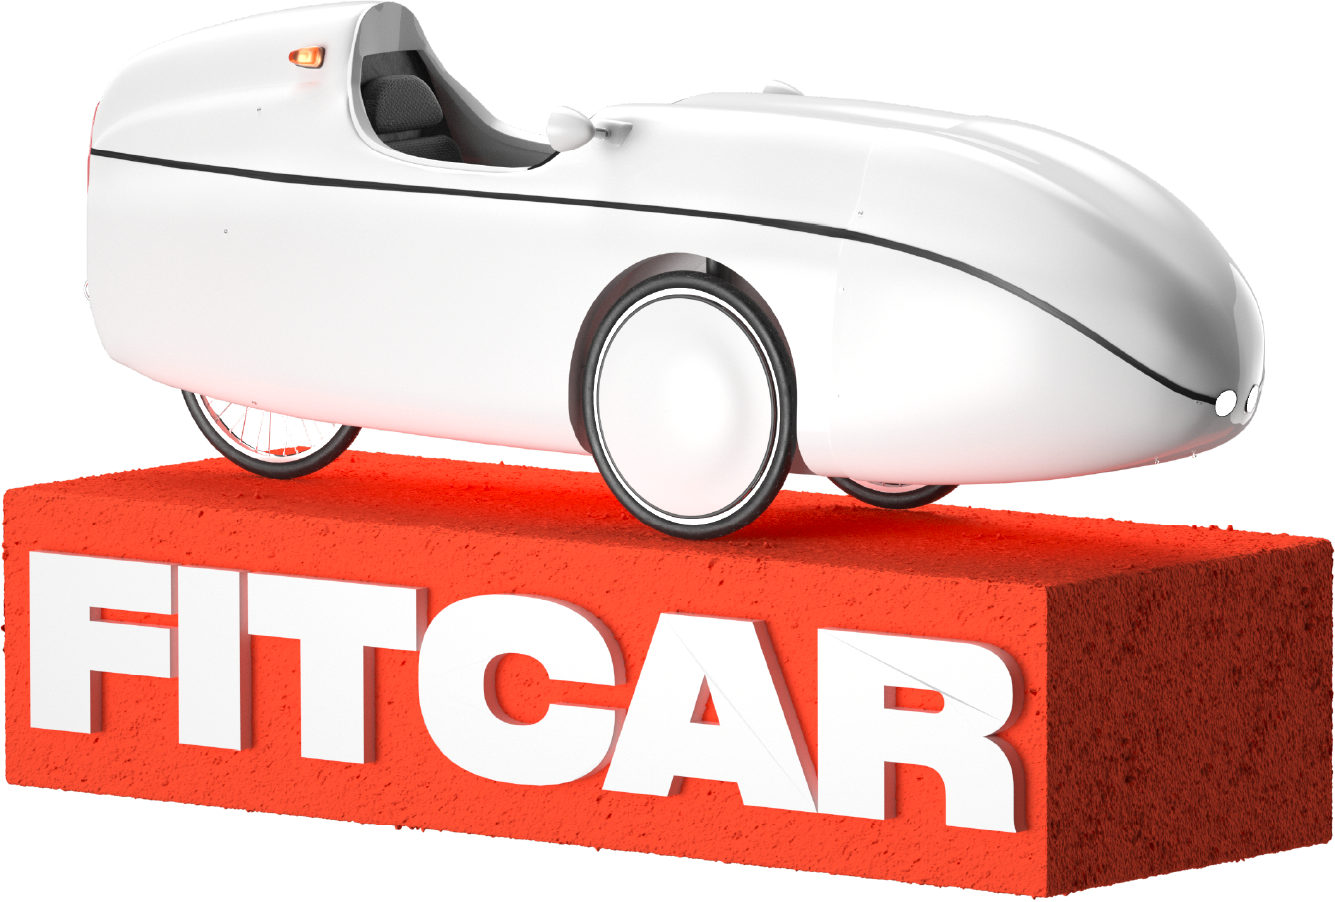 Fitcar® - Agence STREET MARKETING - Haute qualité